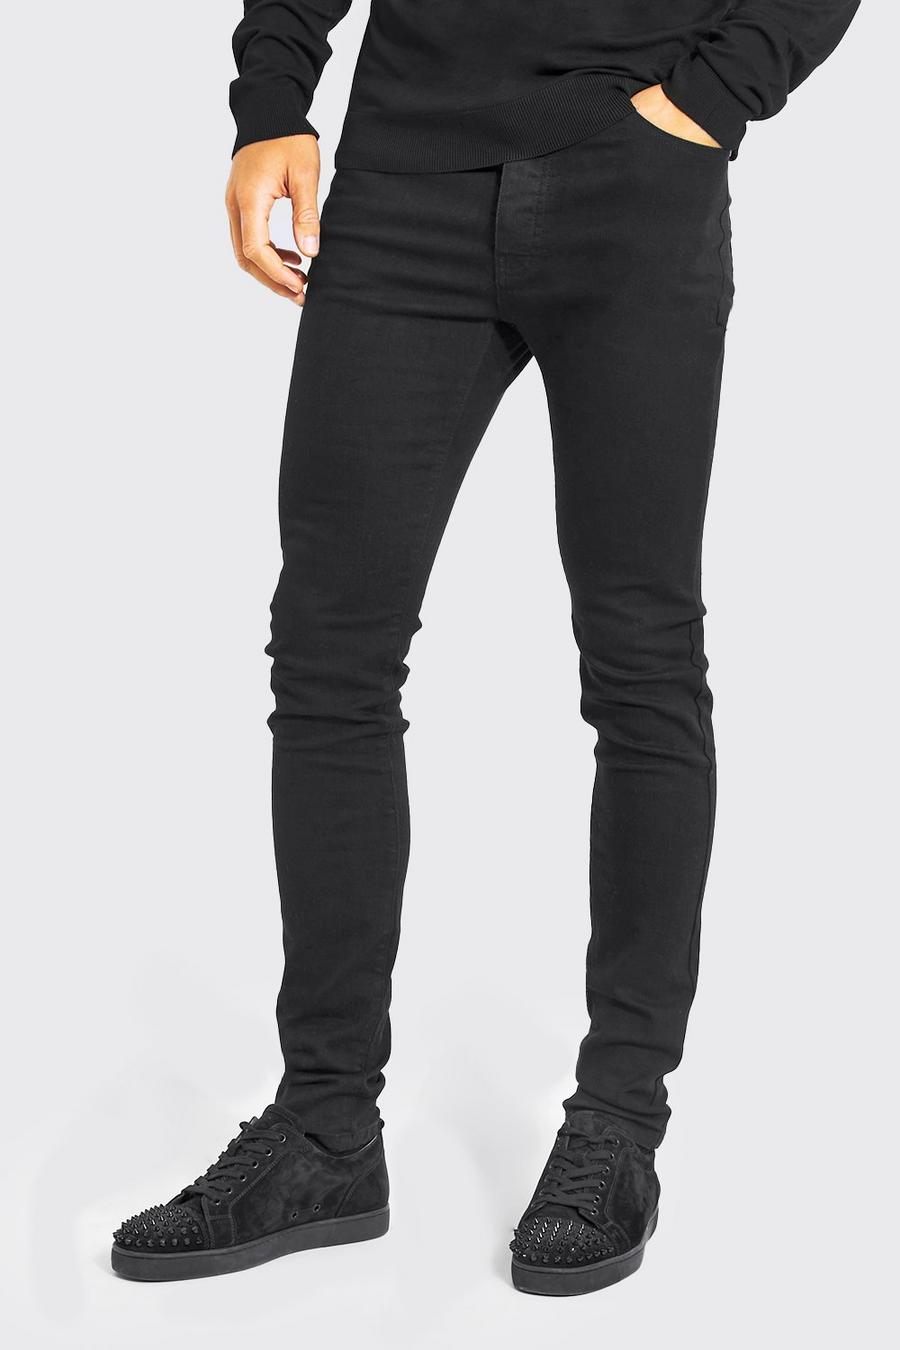 True black ג'ינס נמתח עם כותנה ממוחזרת בגזרת סקיני, לגברים גבוהים